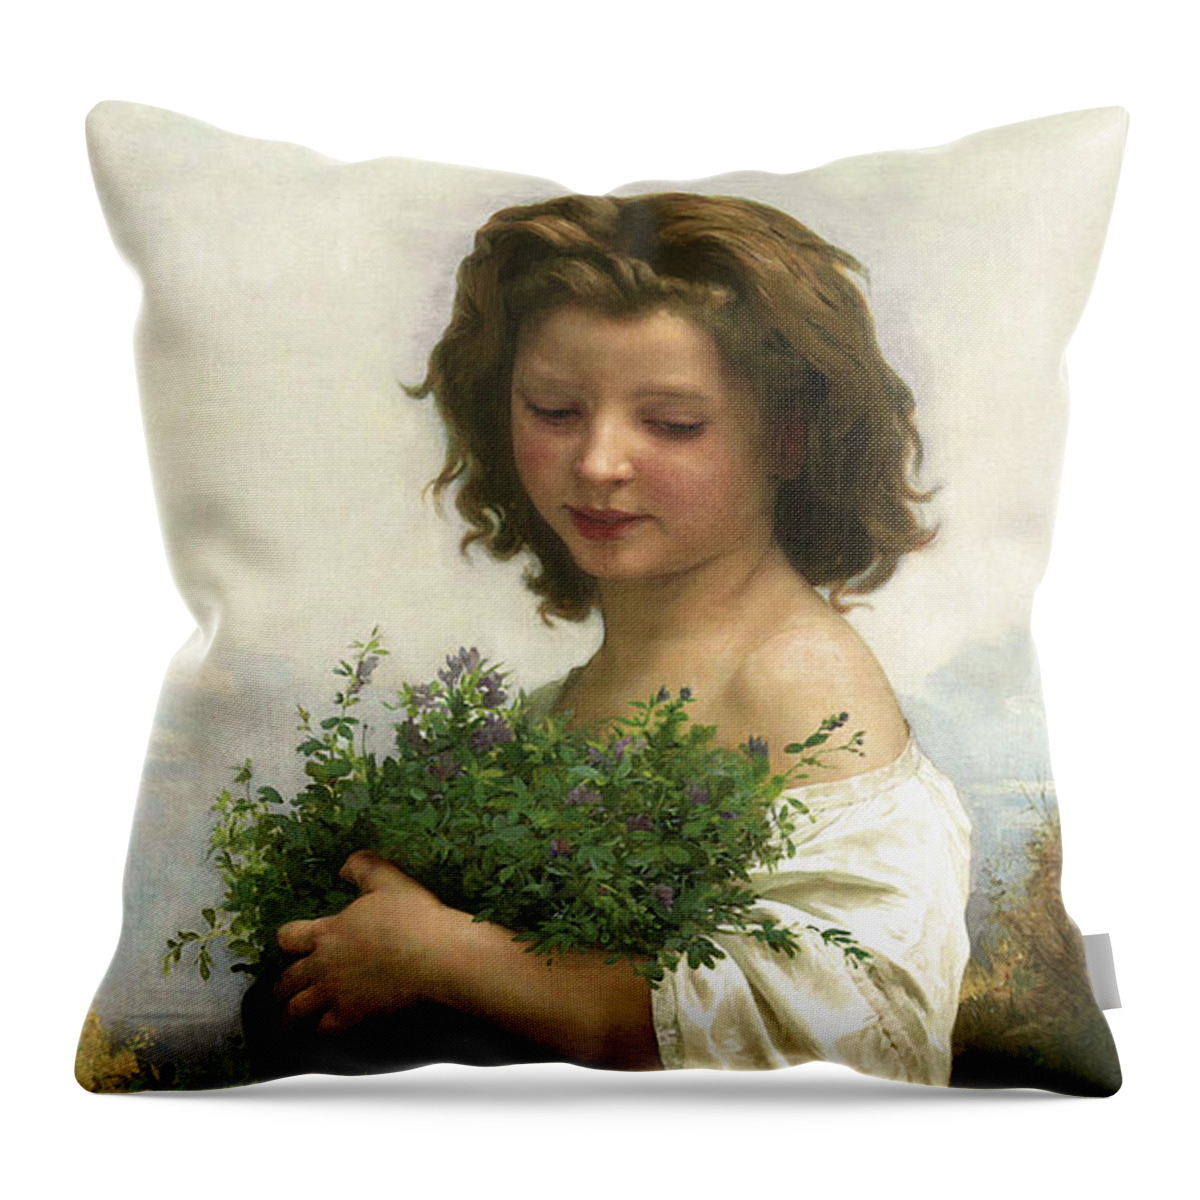 Little Esmeralda Throw Pillow featuring the painting Little Esmeralda by Rolando Burbon